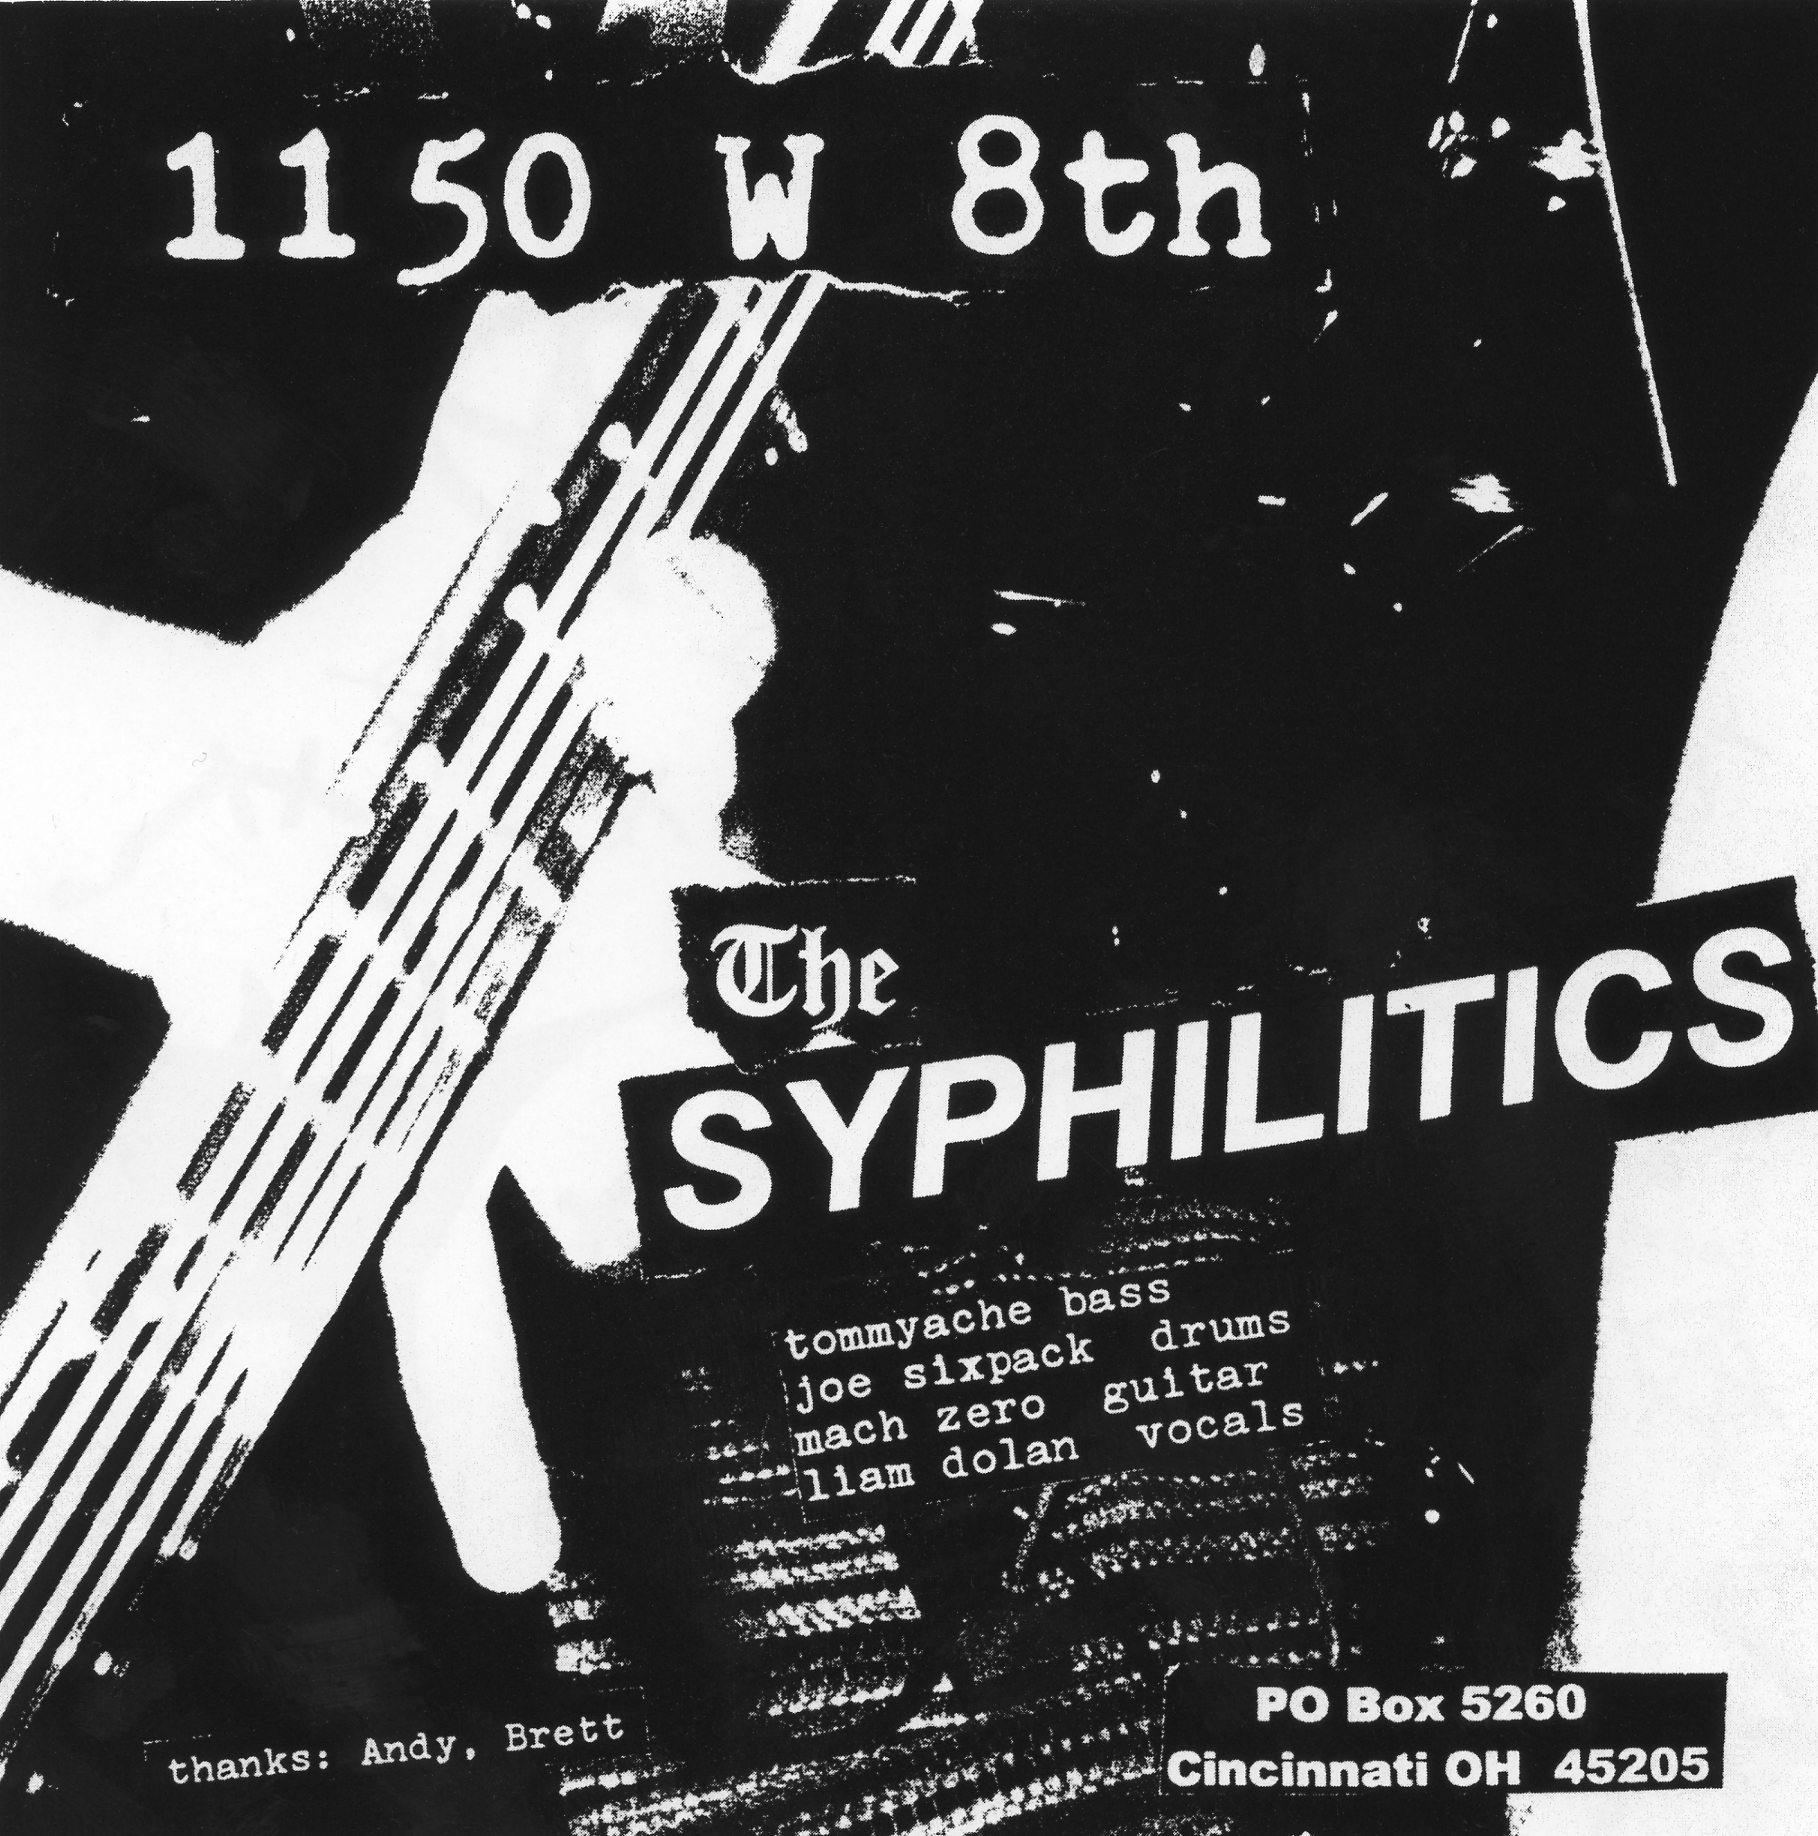 Syphilitics lyric sheet